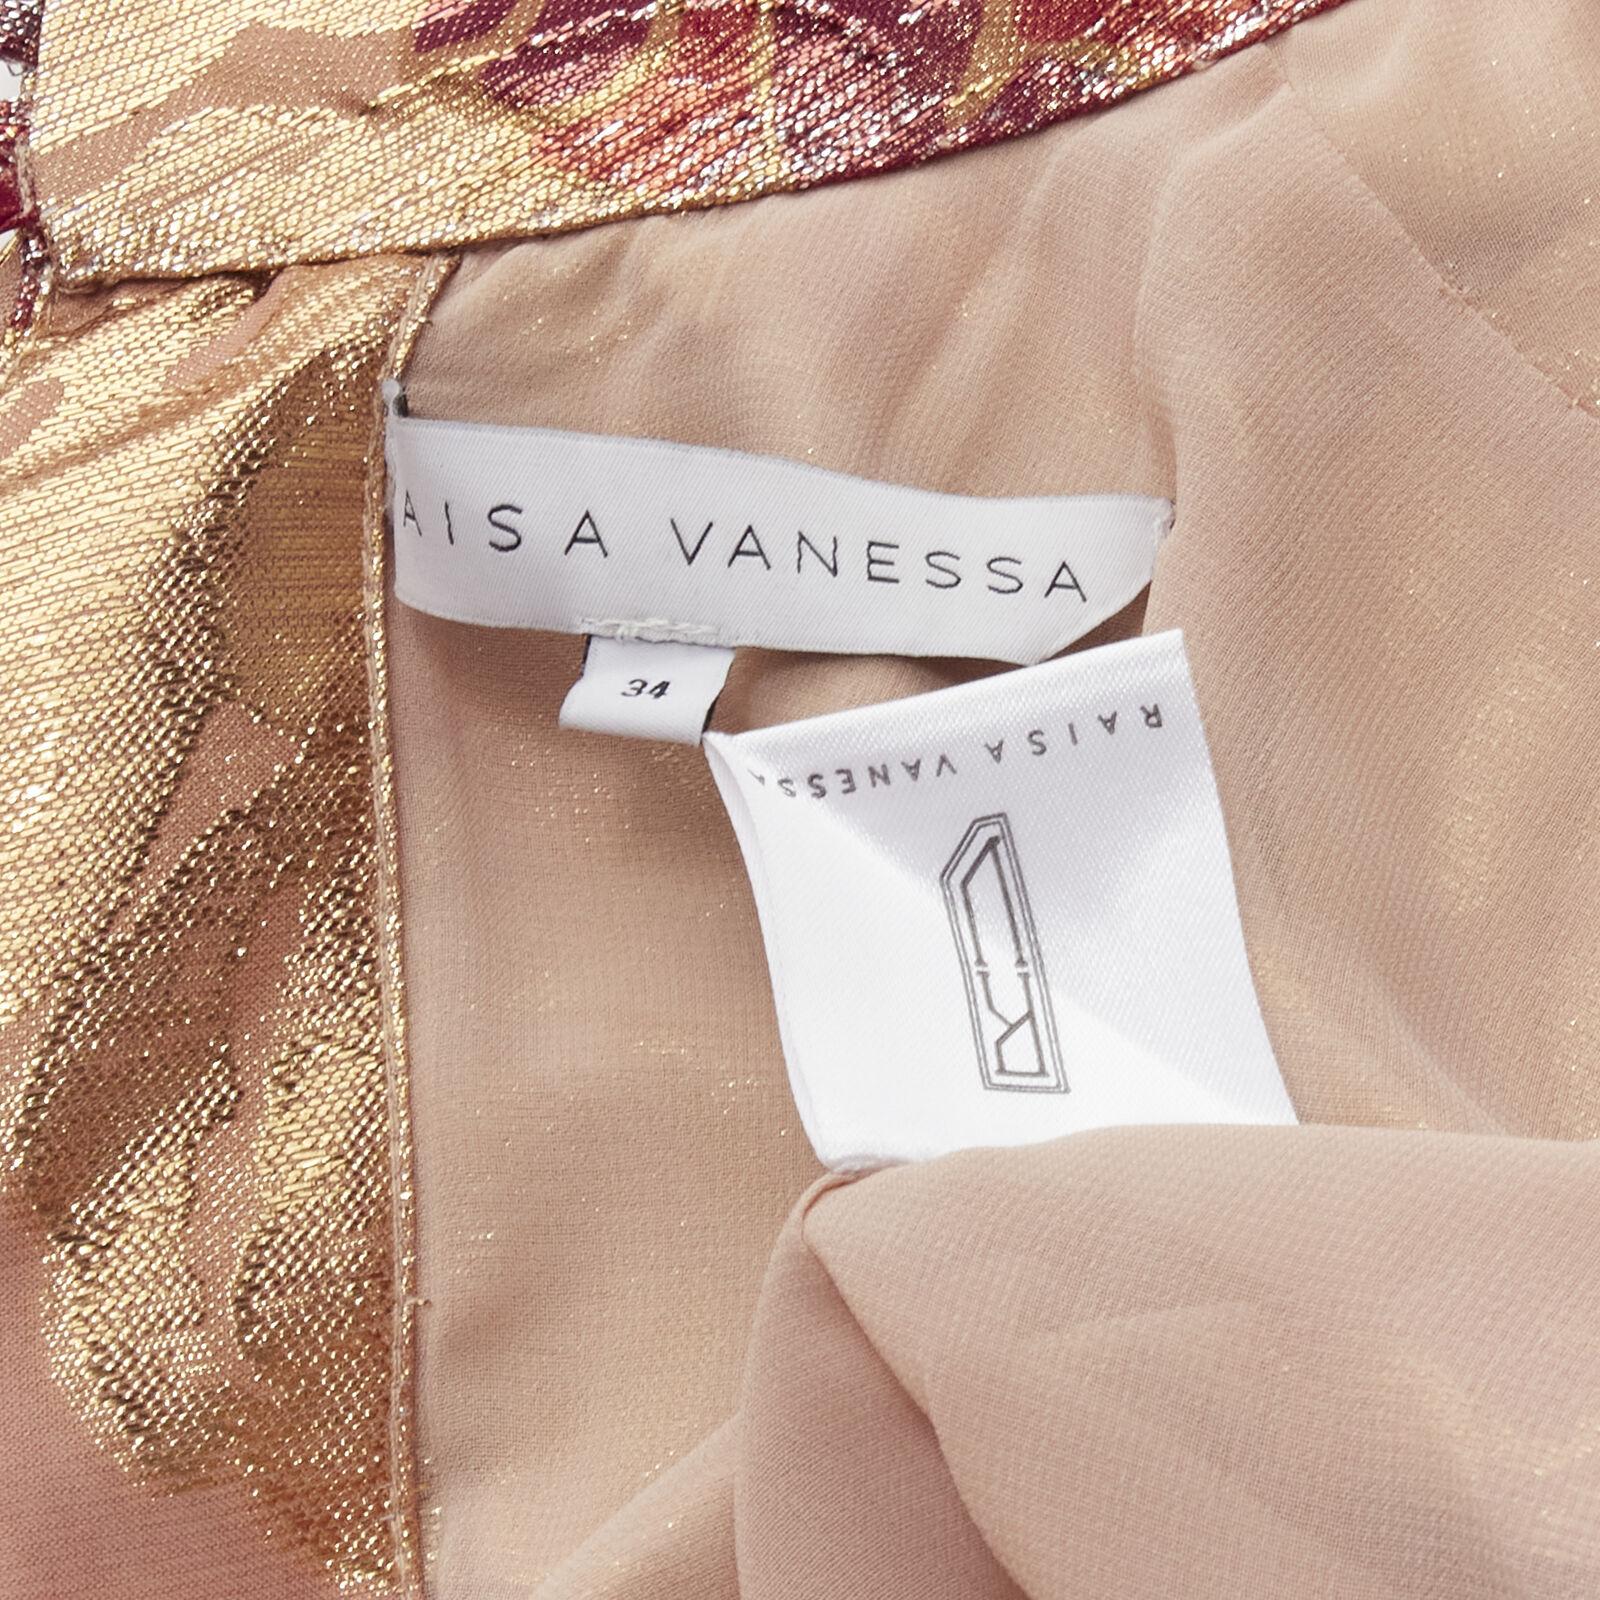 RAISA VANESSA rose gold foil jacquard rhinestone buttons Victorian top FR34 XS For Sale 4